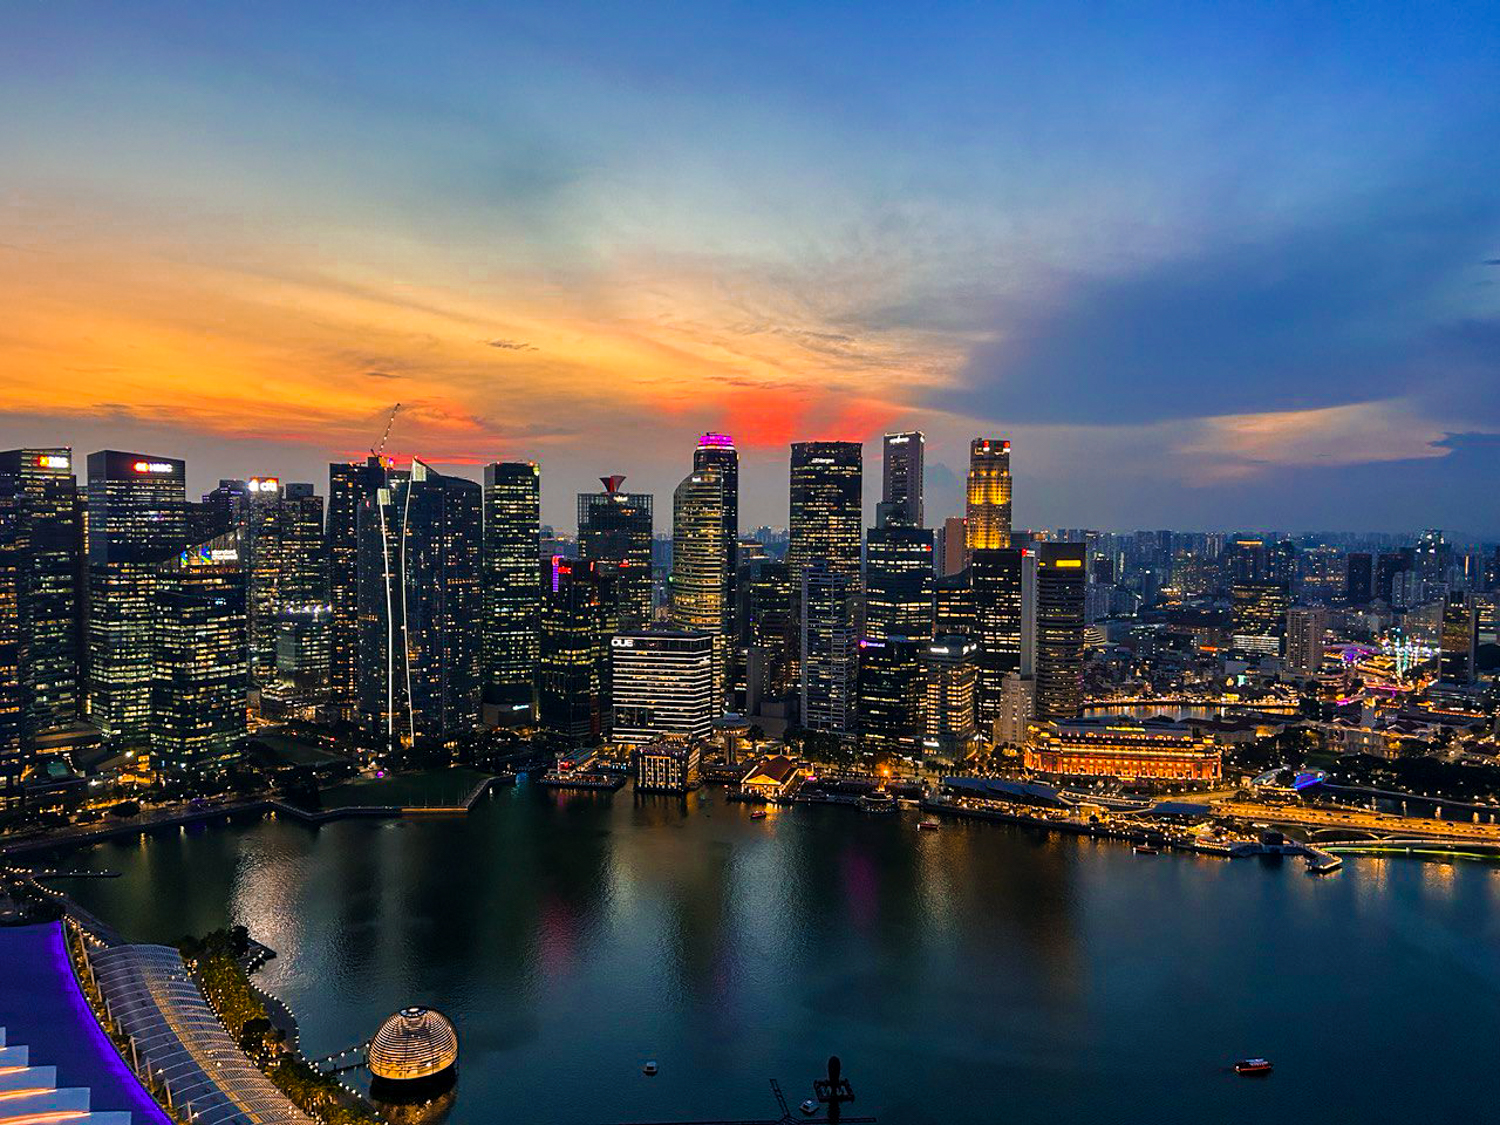 singapore trip cost estimate